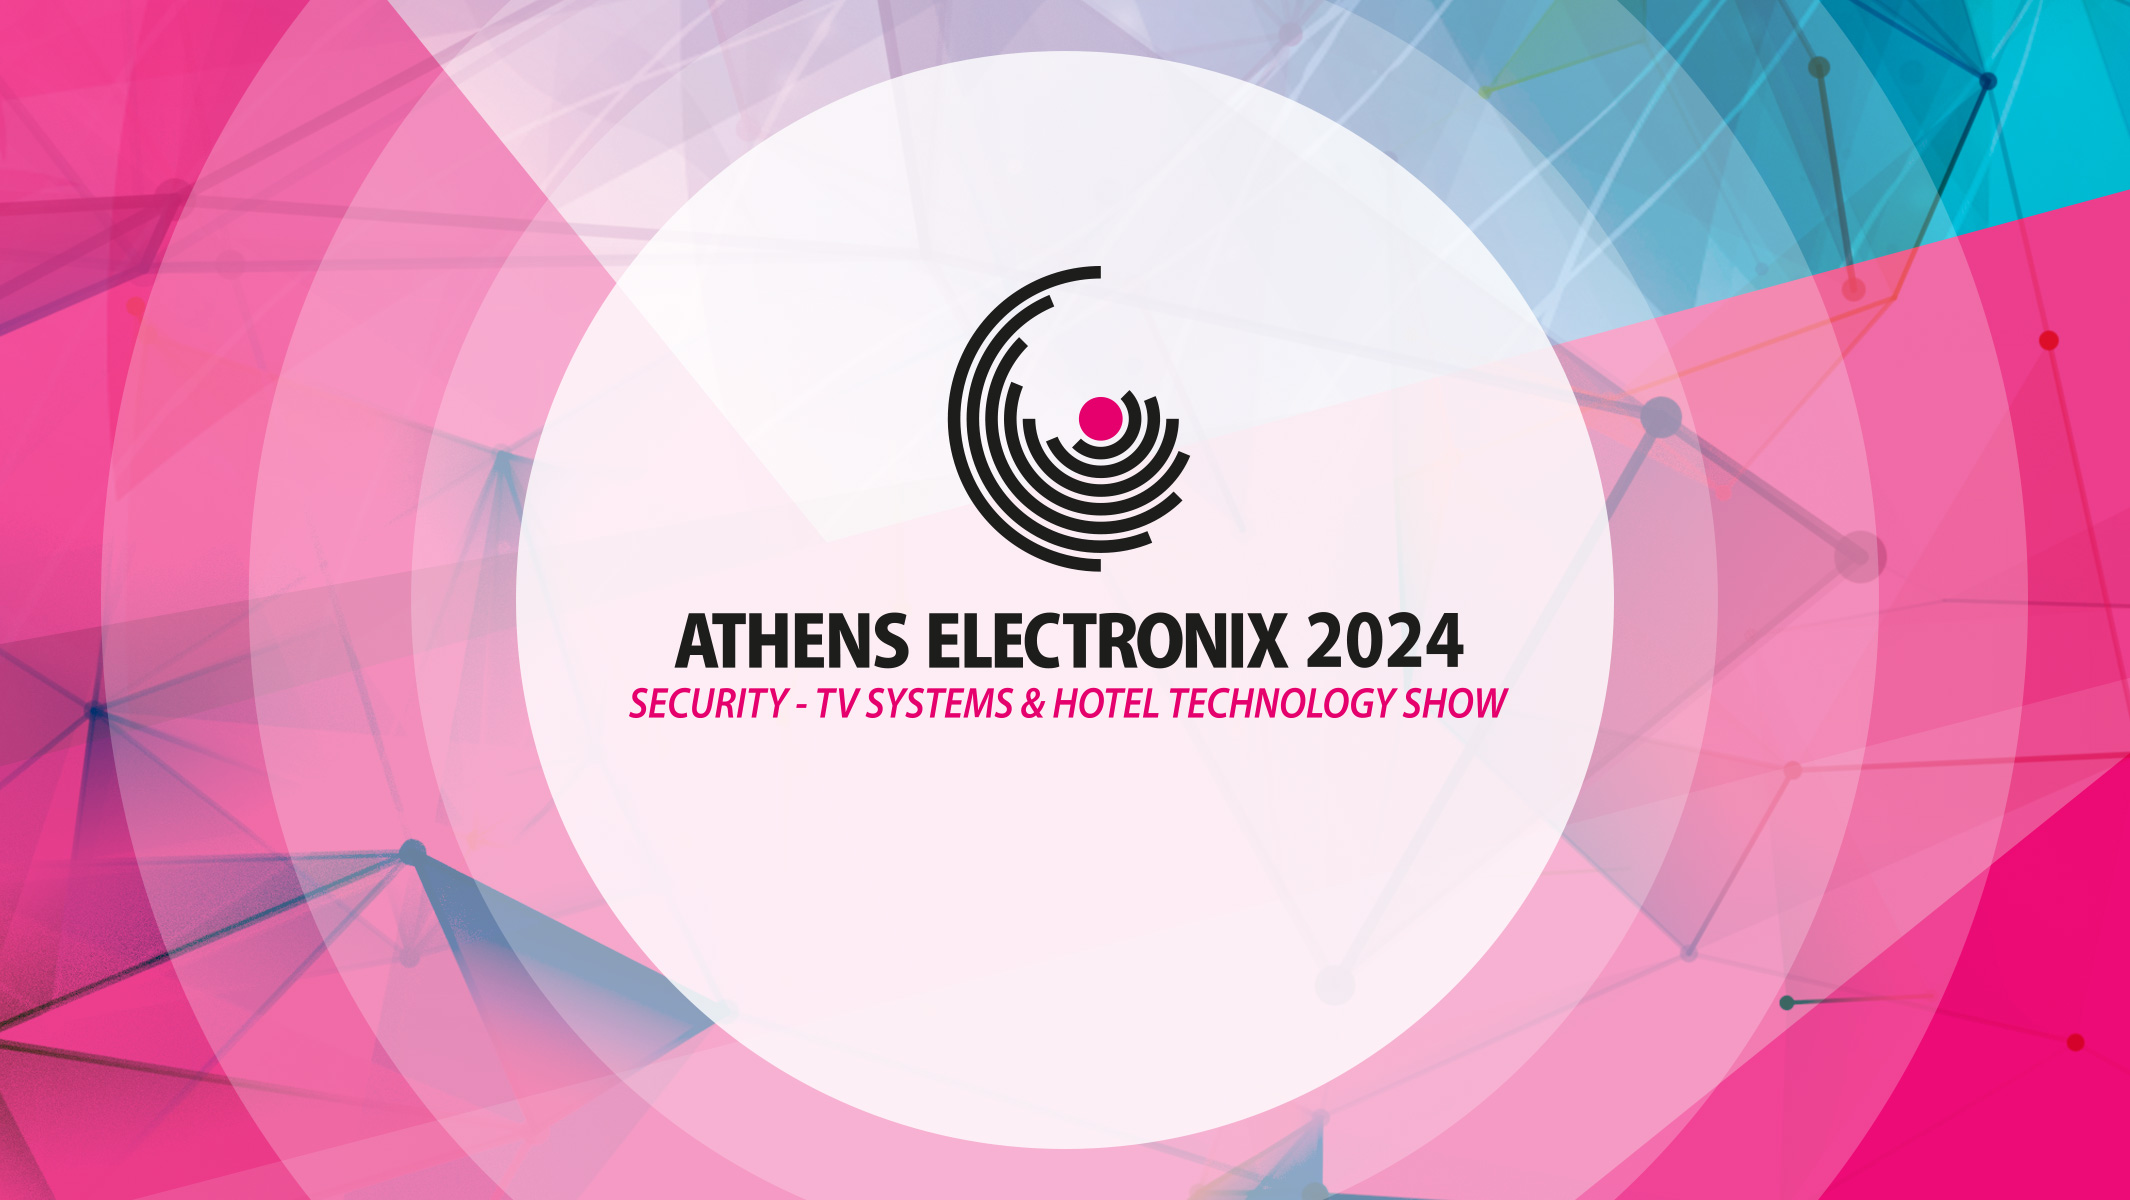 ATHENS ELECTRONIX VIDEO 2130x1200 NEW